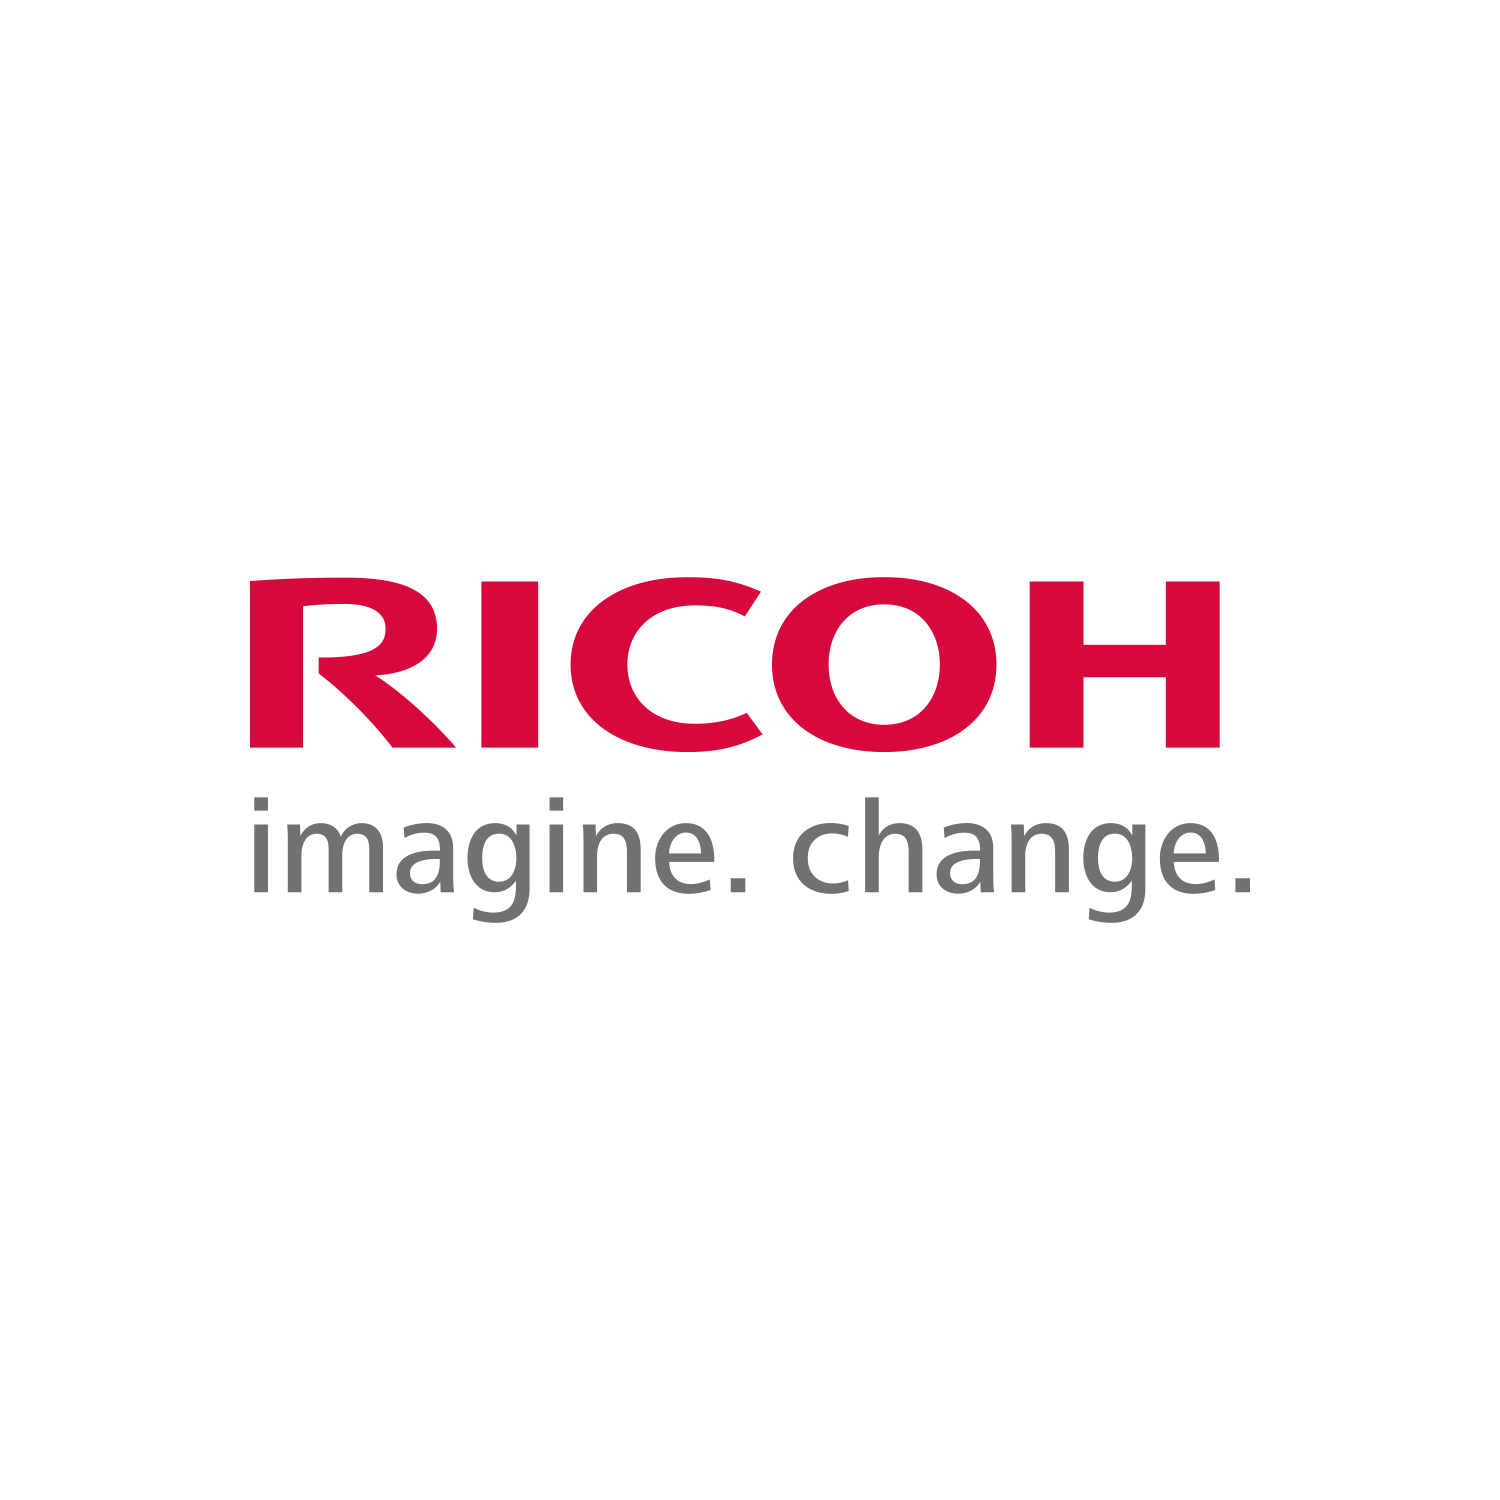 Ricoh India